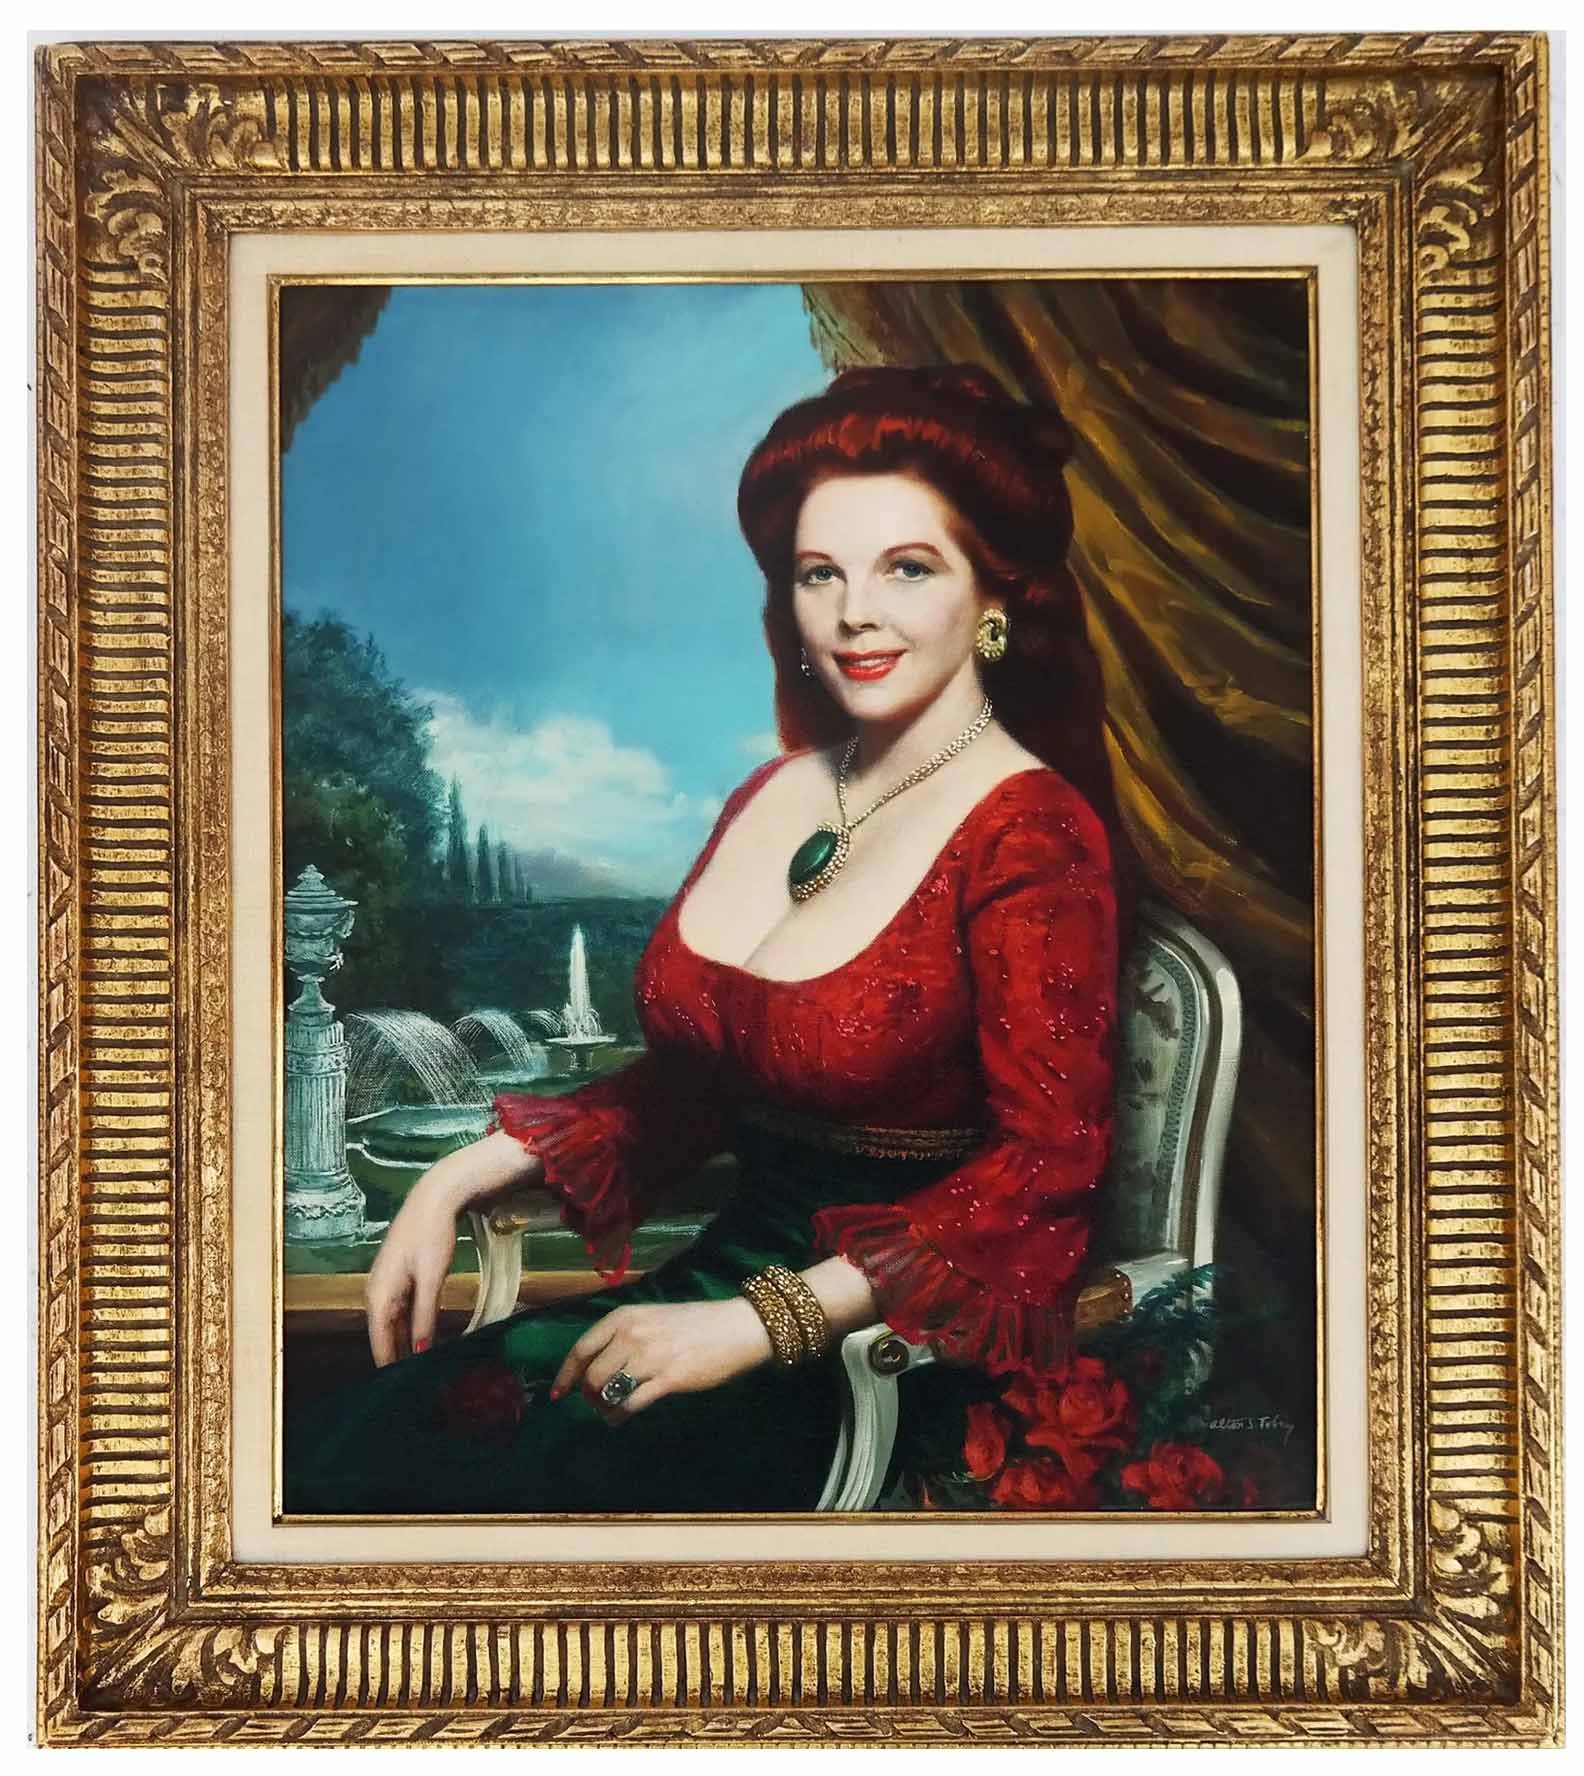 Alton S. Tobey, portrait of Baroness Gabriele Langer von Langendorff, estimated at $3,000-$5,000 at Roland NY.